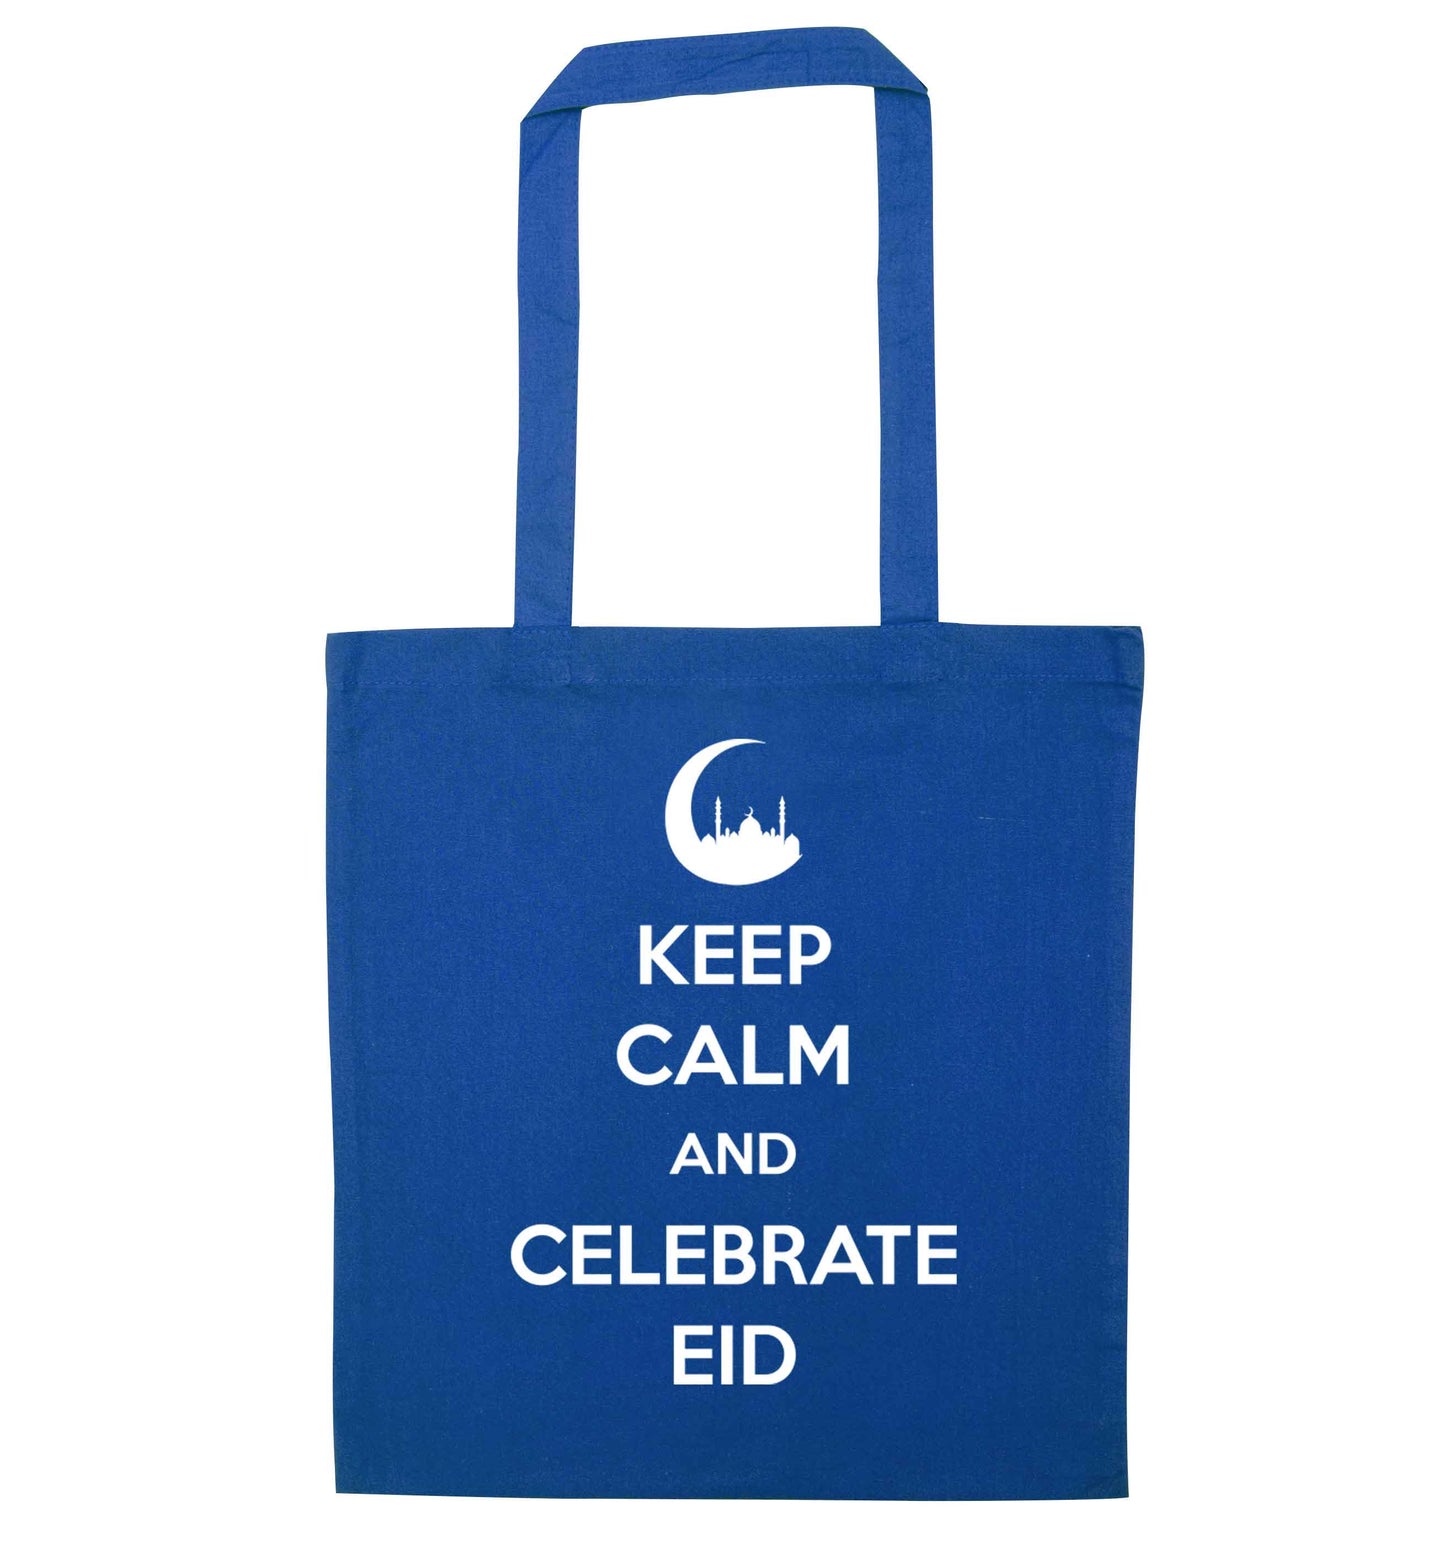 Keep calm and celebrate Eid blue tote bag